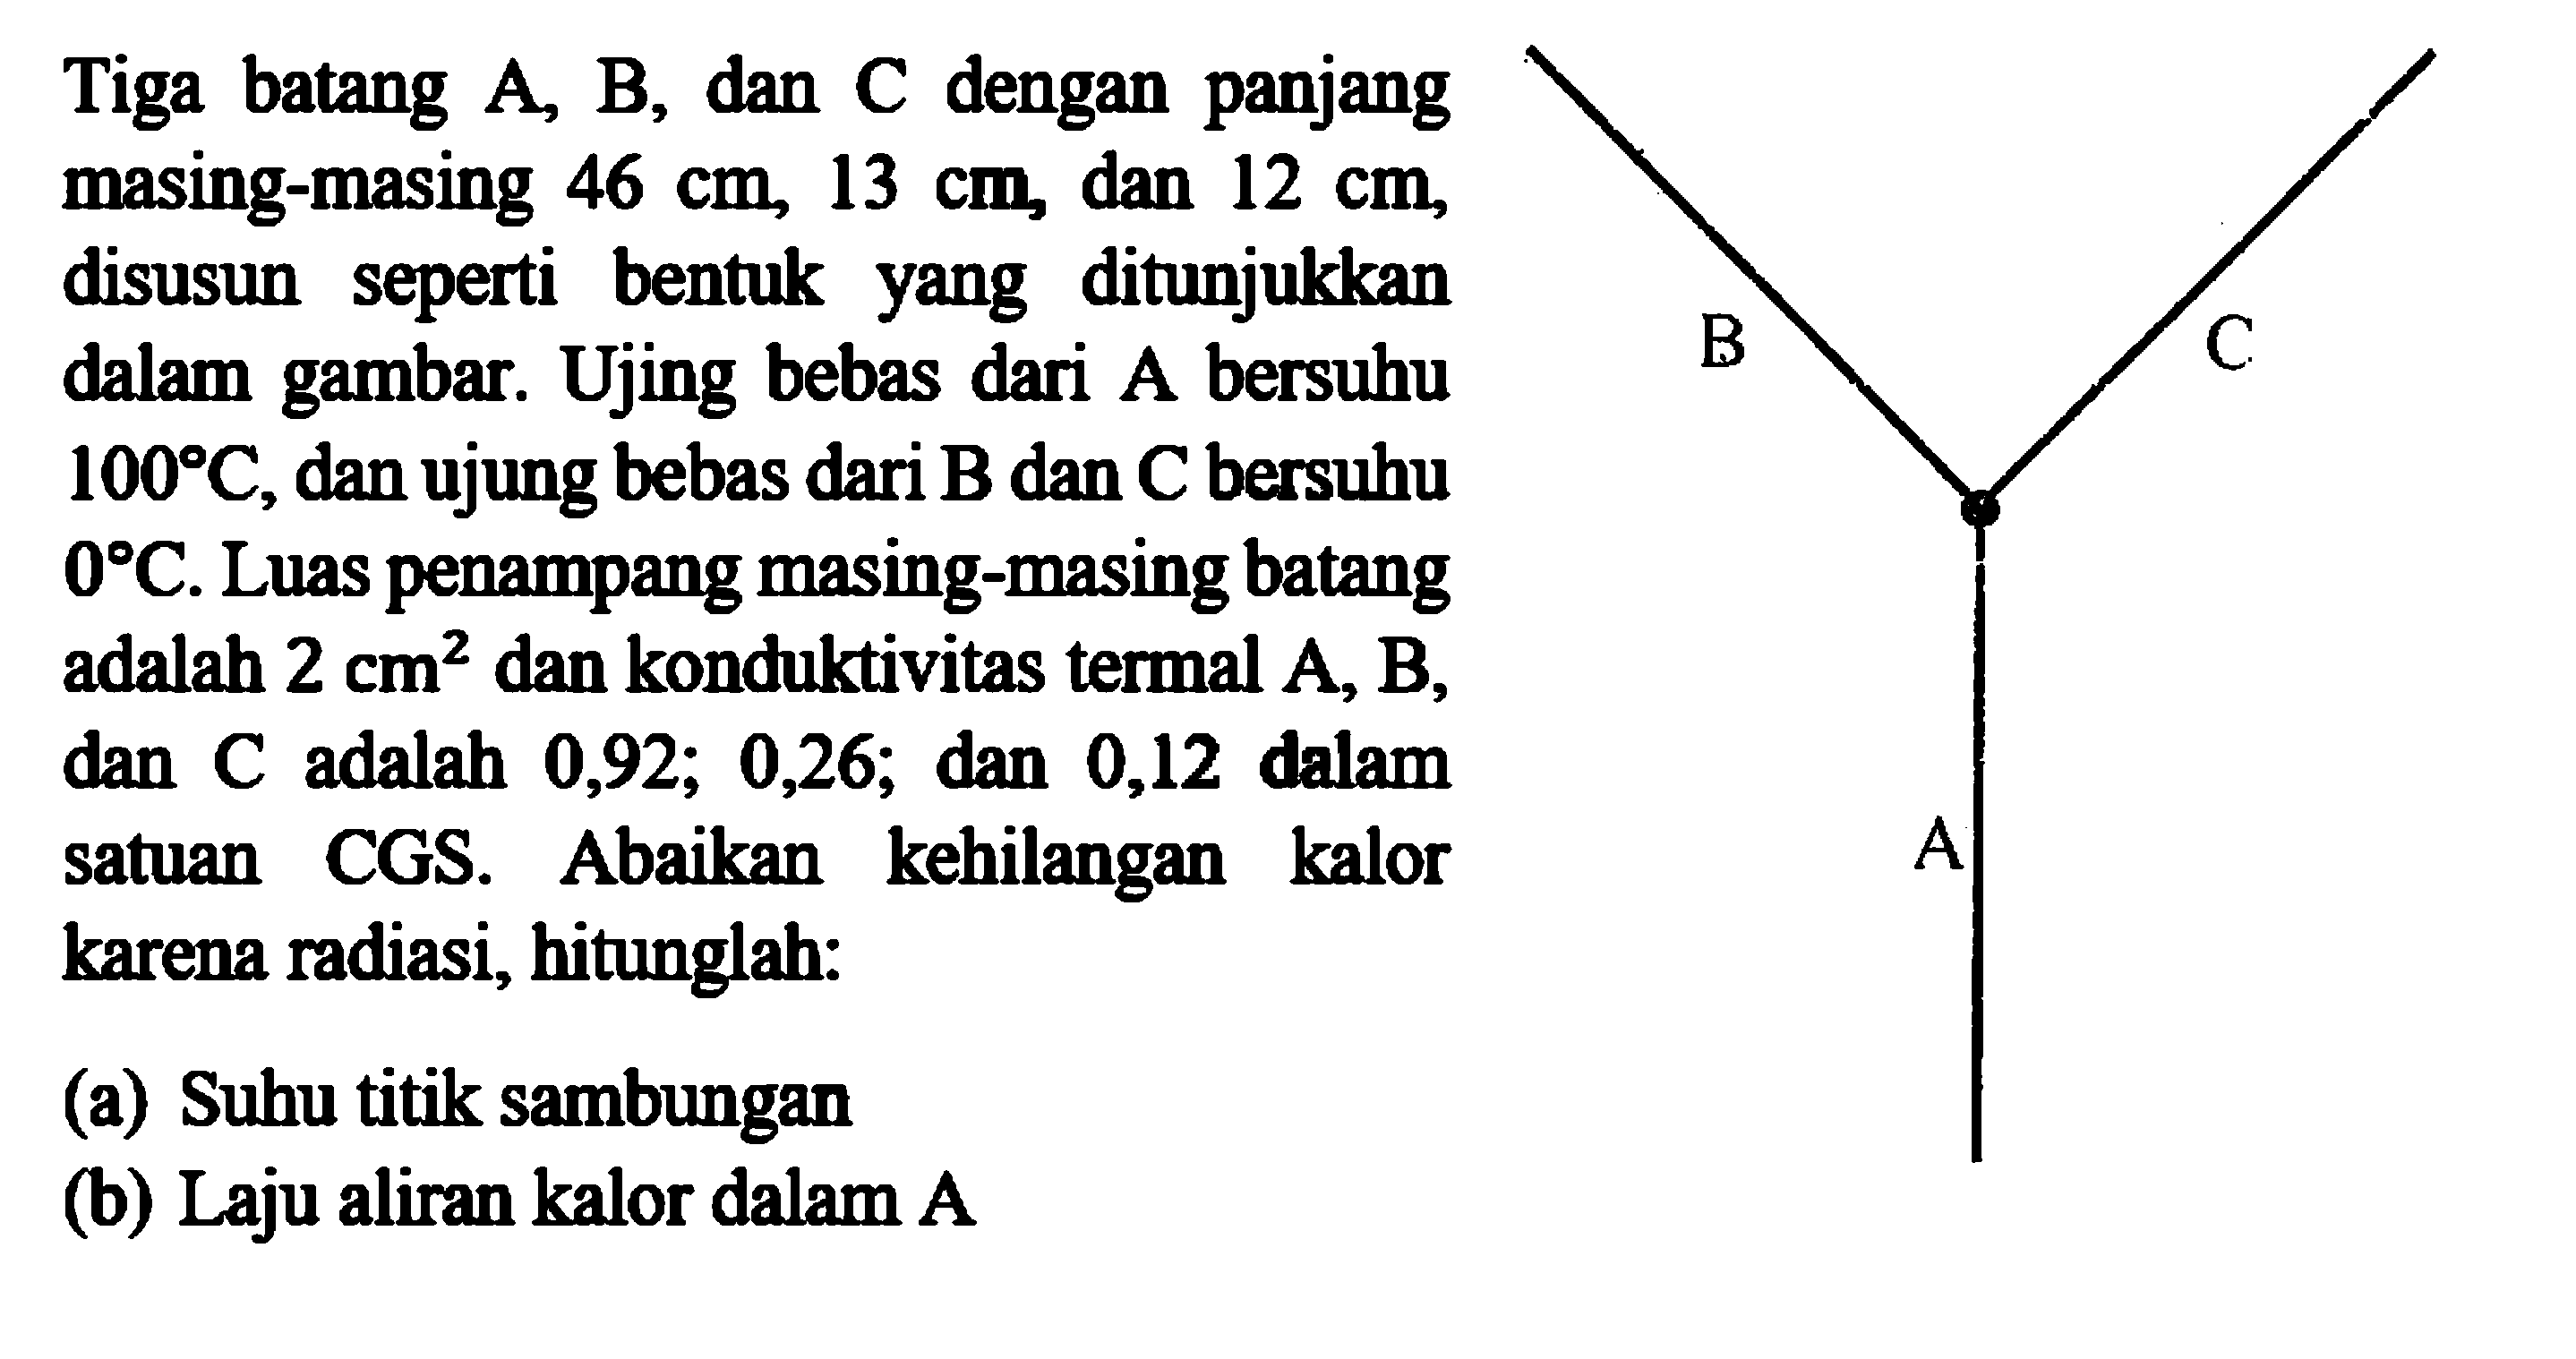 Tiga batang A, B, dan C dengan panjang masing-masing 46 cm, 13 cm, dan 12 cm, disusun seperti bentuk yang ditunjukkan dalam gambar. Ujing bebas dari A bersuhu 100 C, dan ujung bebas dari B dan C bersuhu 0 C. Luas penampang masing-masing batang adalah 2 cm^2 dan konduktivitas termal A, B, dan C adalah 0, 92 ; 0,26 ; dan 0,12 dalam satuan CGS. Abaikan kehilangan kalor karena radiasi, hitunglah:(a) Suhu titik sambungan(b) Laju aliran kalor dalam A